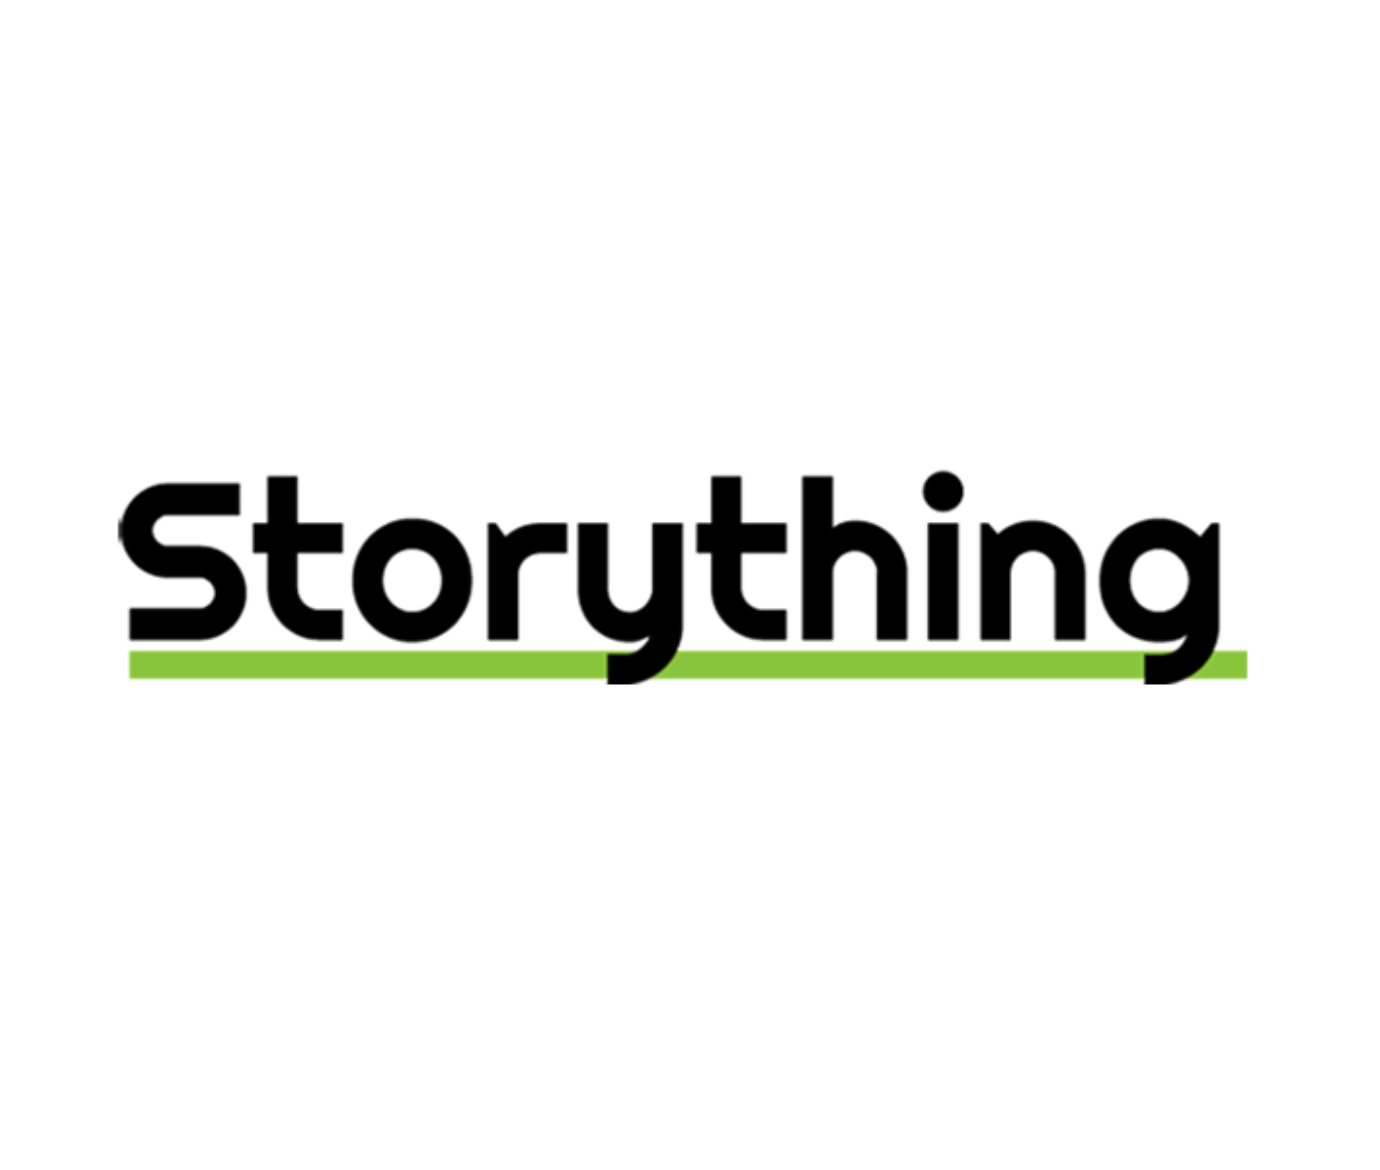 Storything